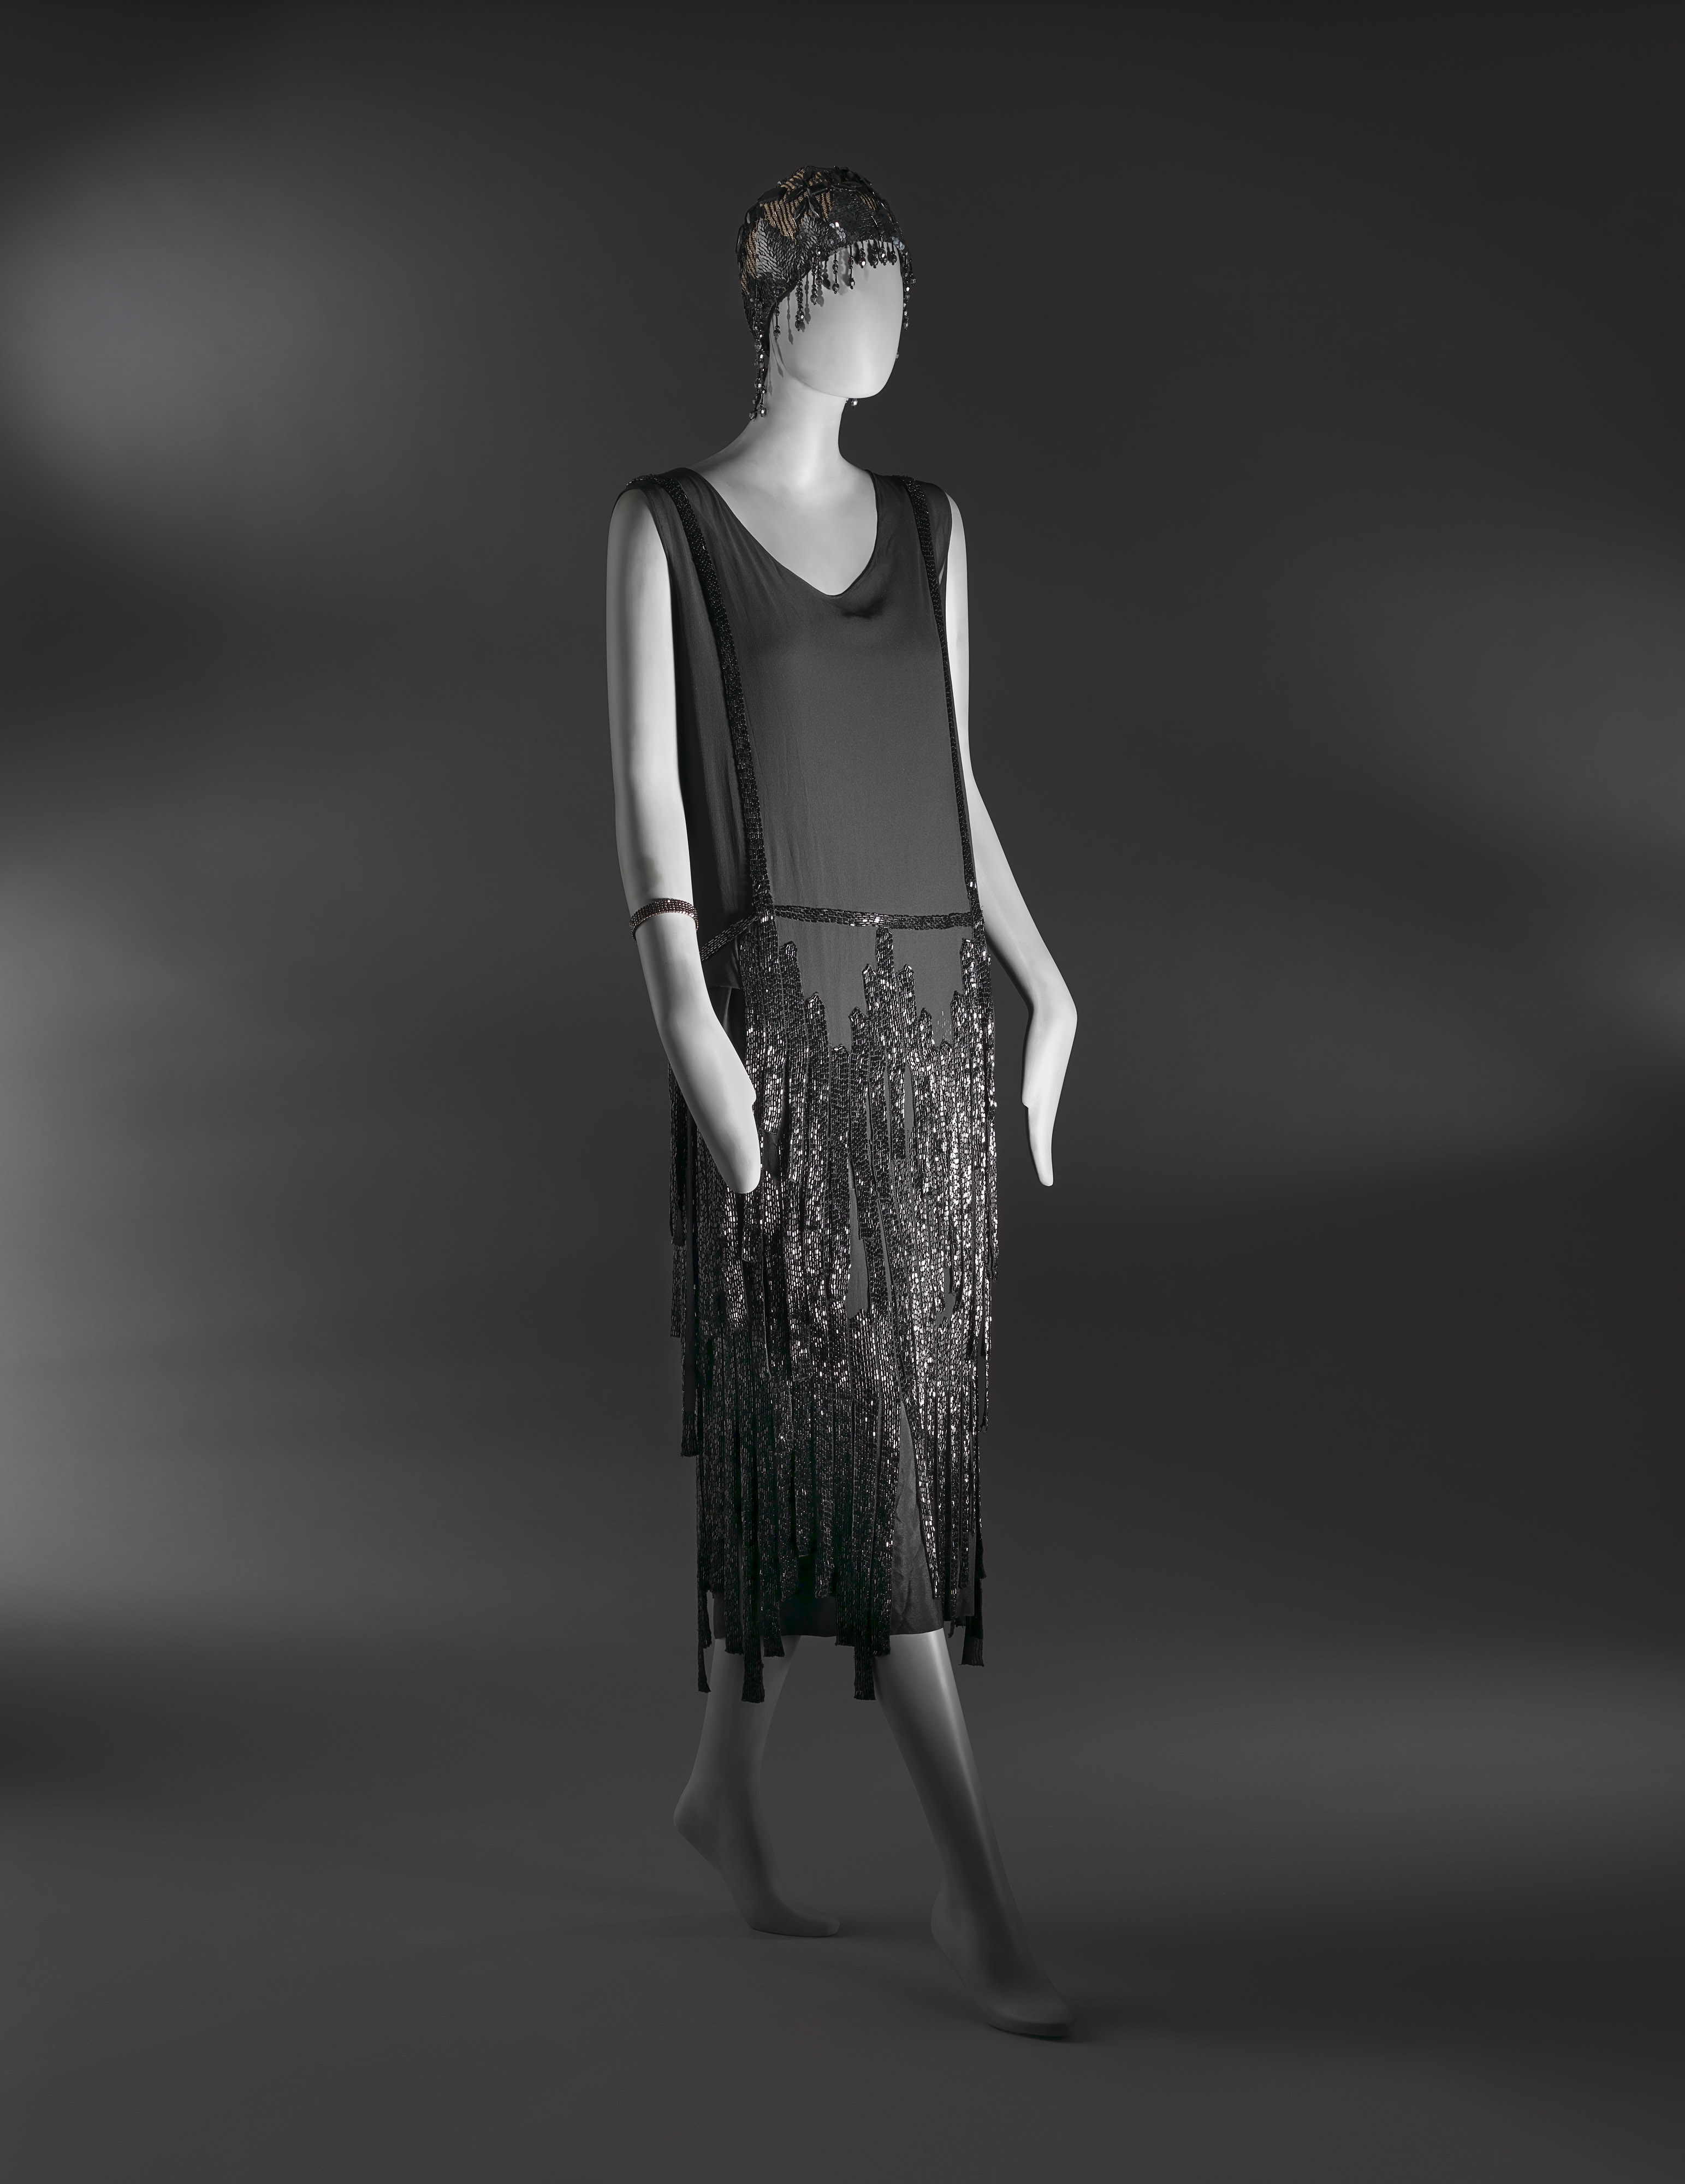 Chanel's Little Black Dress – georgia moodie